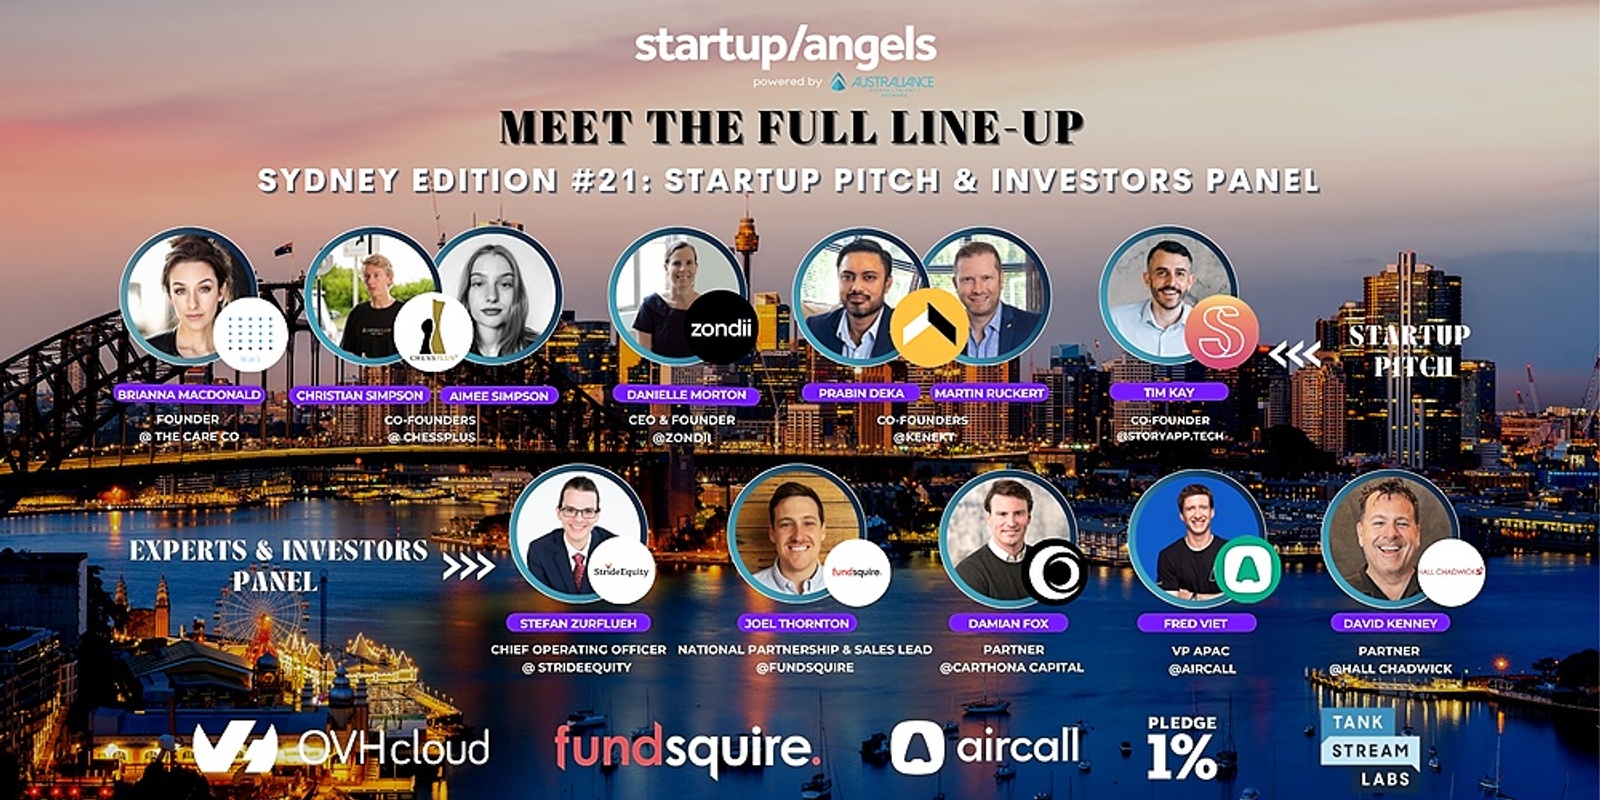 Startup&Angels | Startups pitch & Investors panel  | Sydney #21 Edition